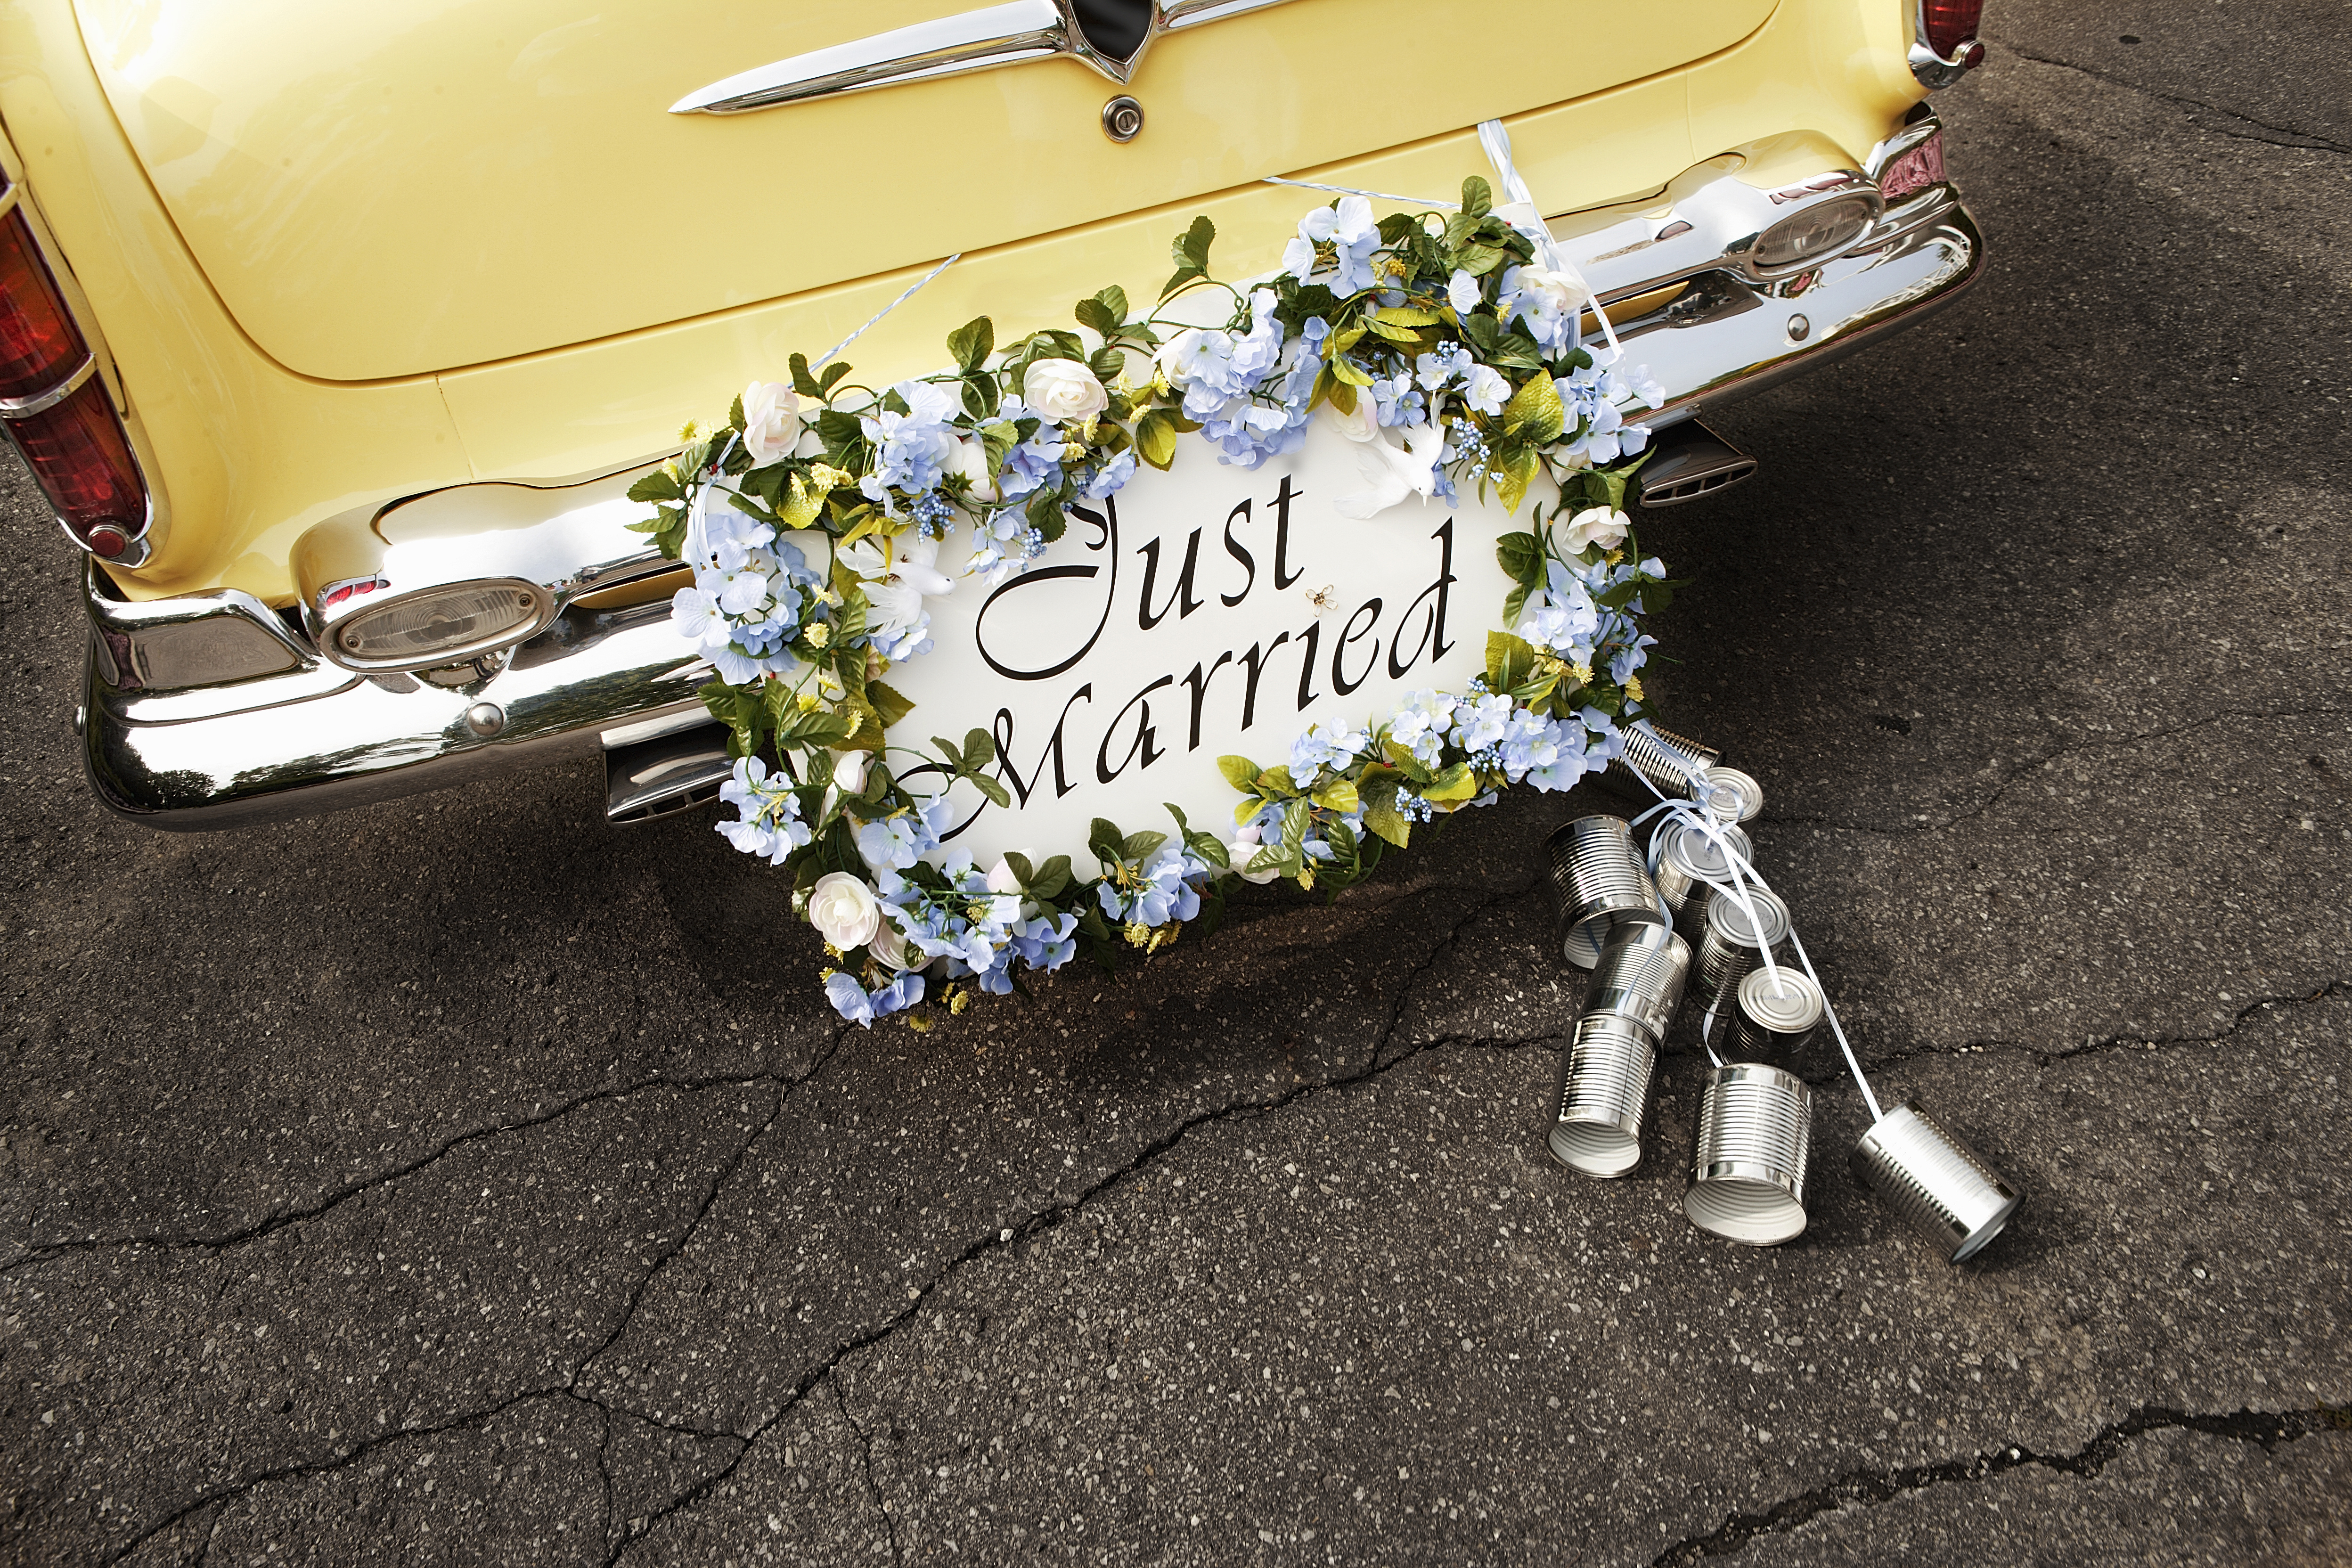 just married sign on bumper of vintage car